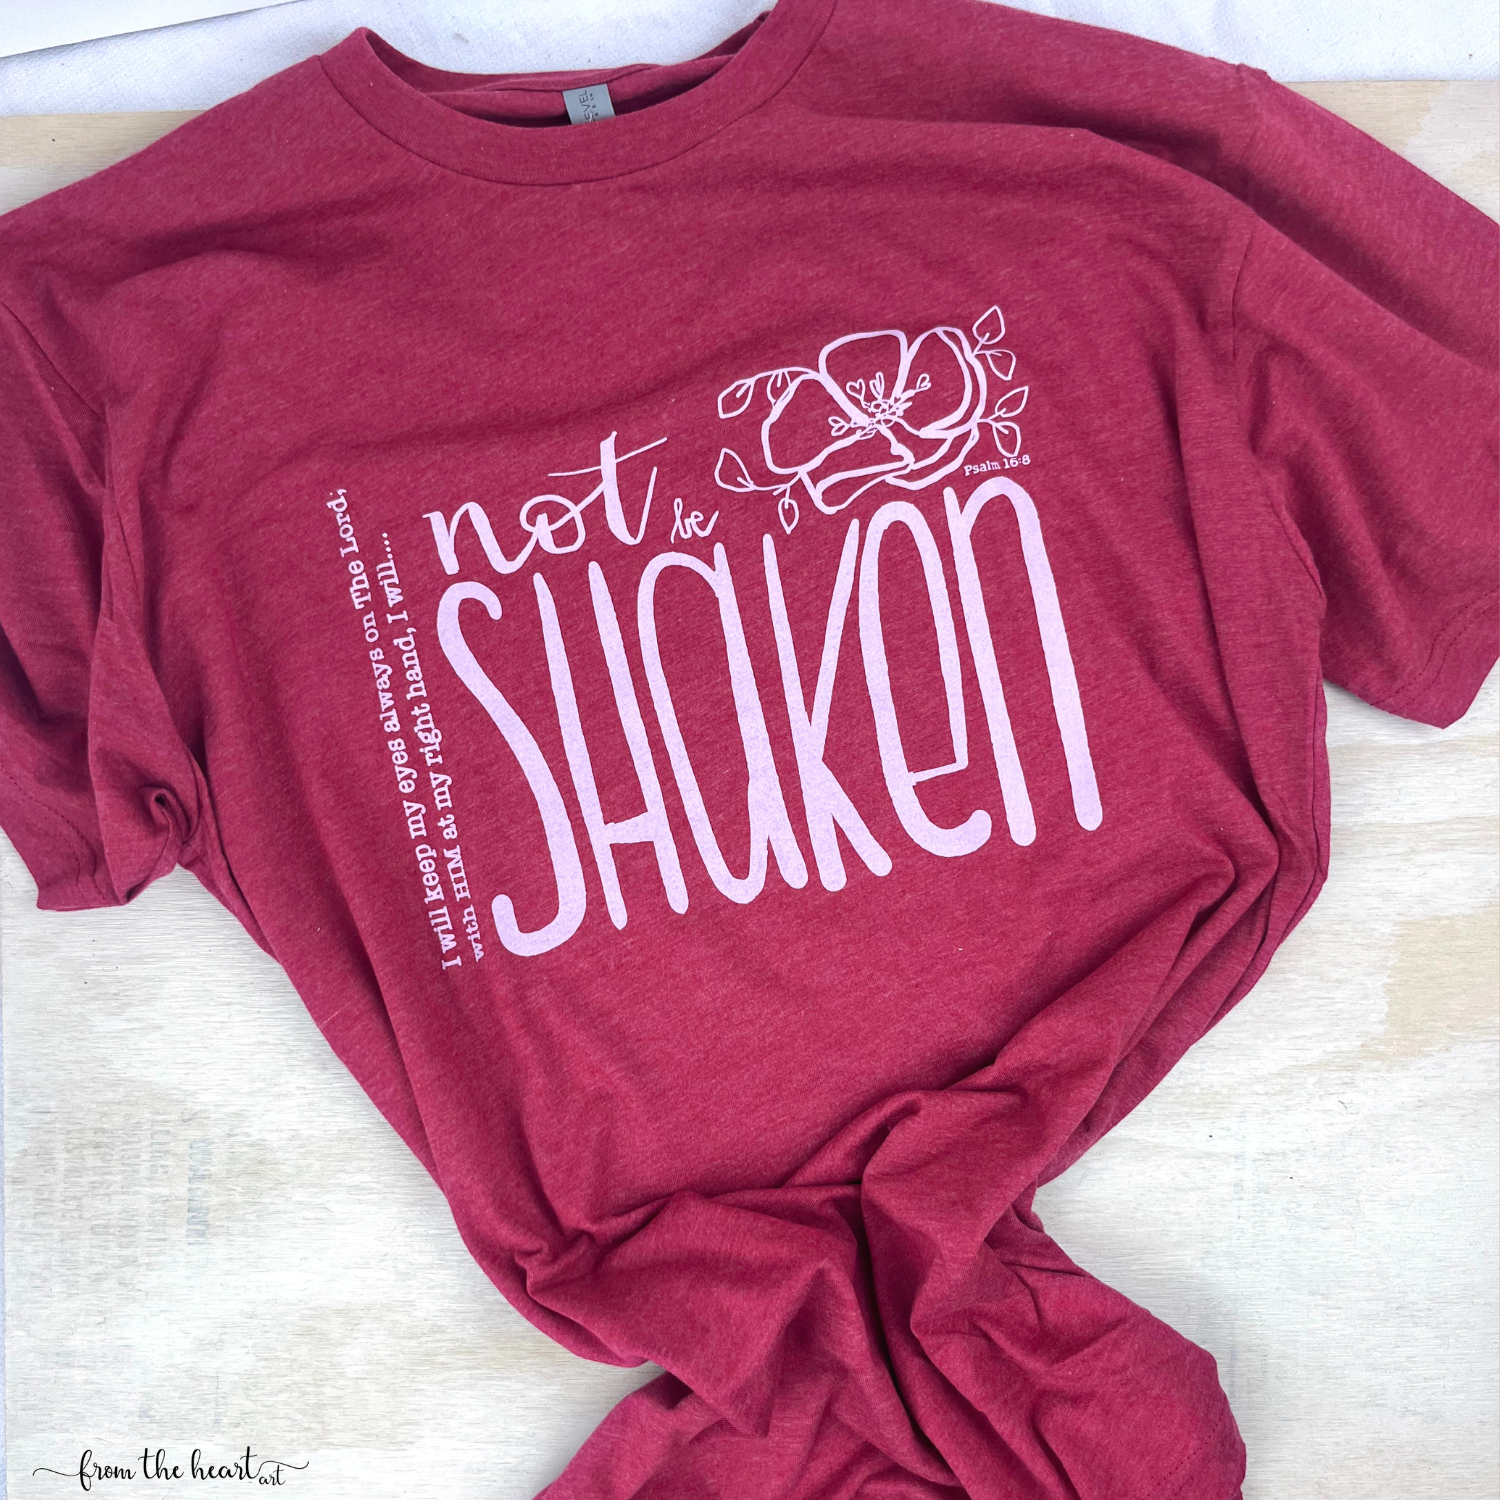 "Will Not Be Shaken" T Shirt